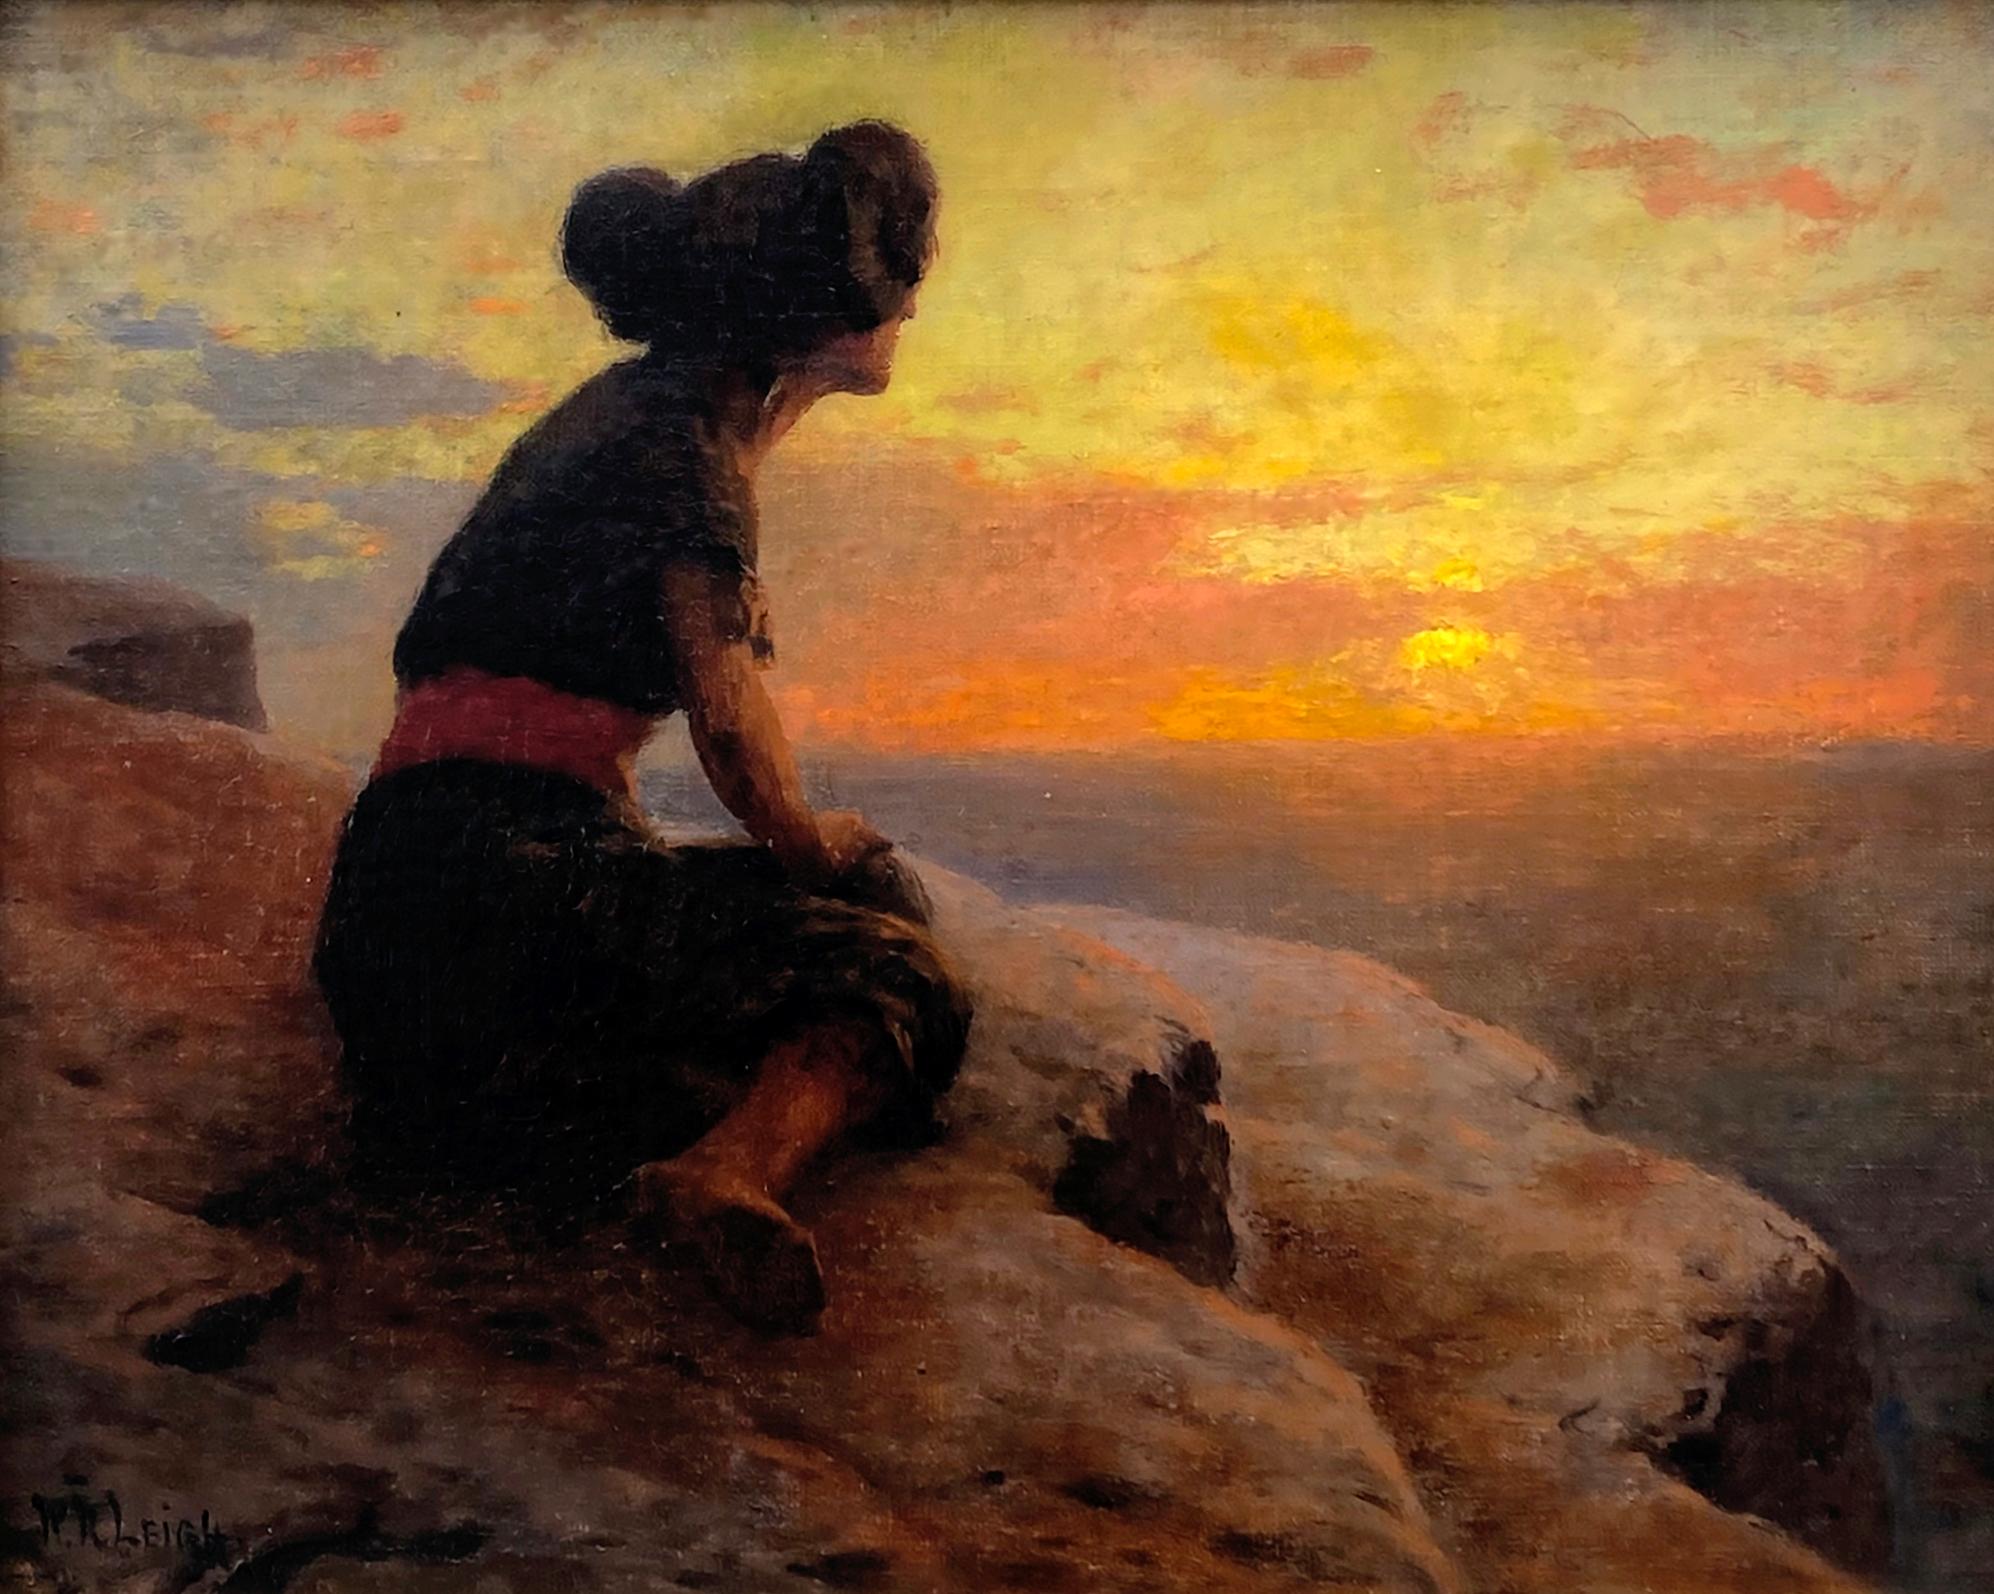 Arizona Sunset - A Hopi Maiden